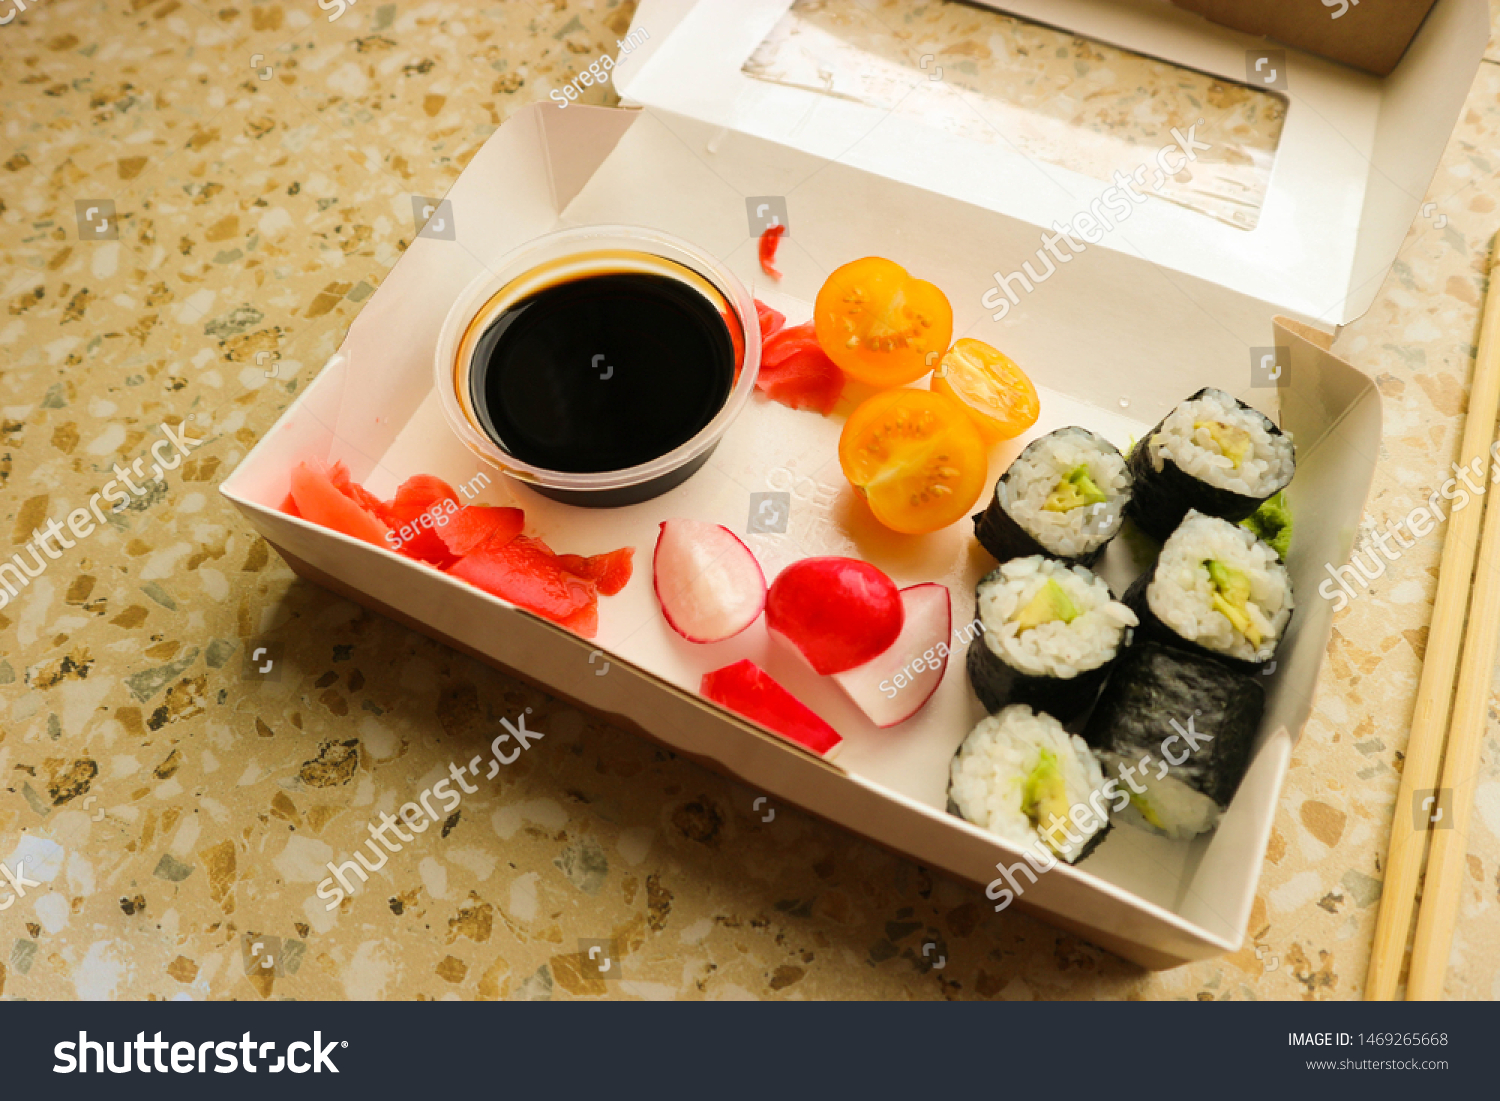 Download Sushi Chopsticks Paper Box Radish Yellow Food And Drink Stock Image 1469265668 PSD Mockup Templates